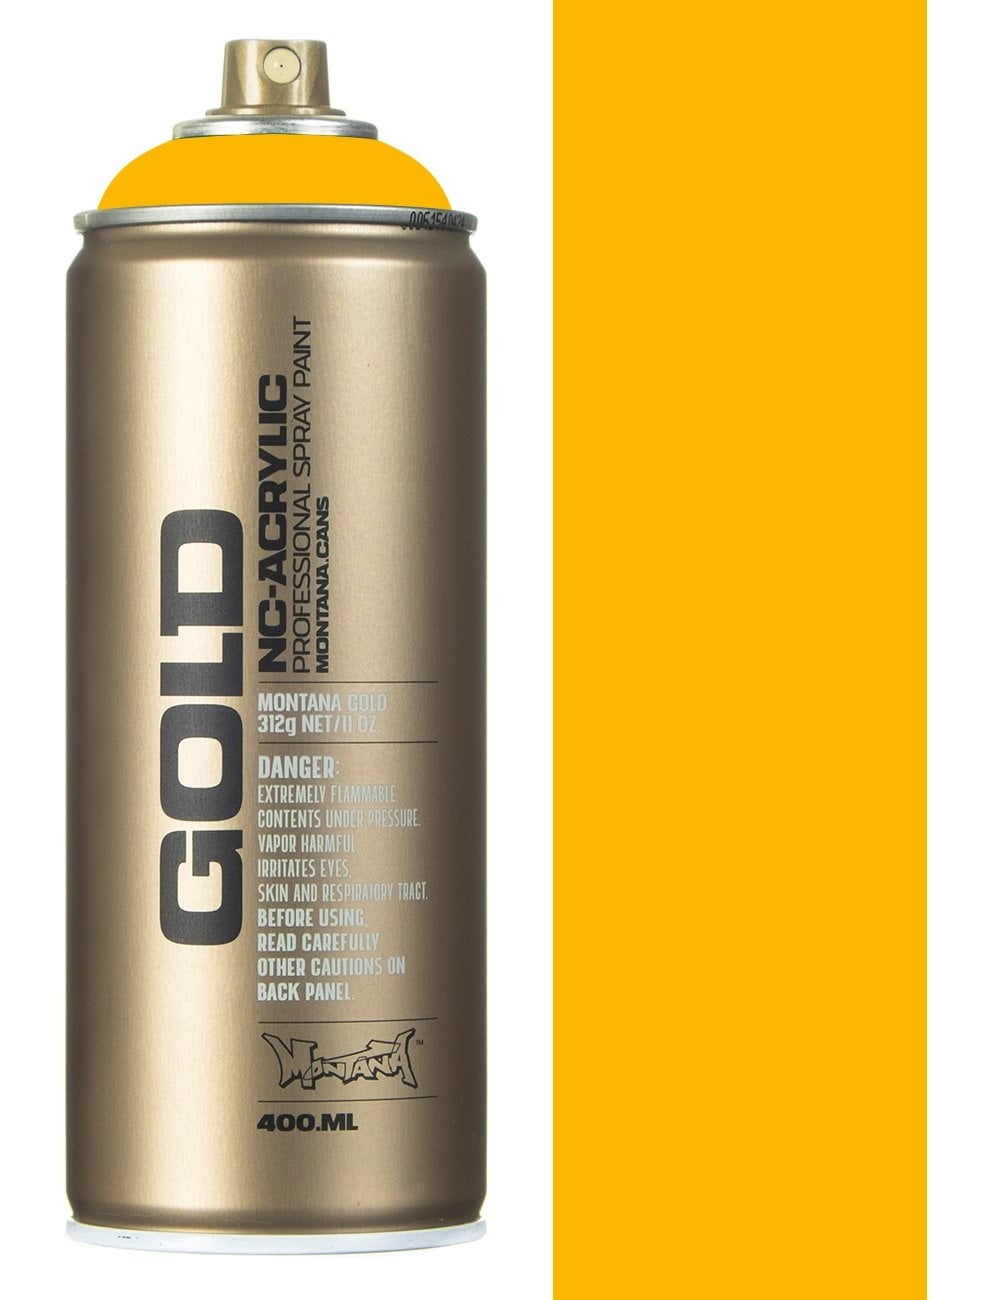 Купить Краска для граффити Montana Gold 400 мл в аэрозоли, медово-желтая, Montana (L&G VERTRIEBS GmbH), Германия